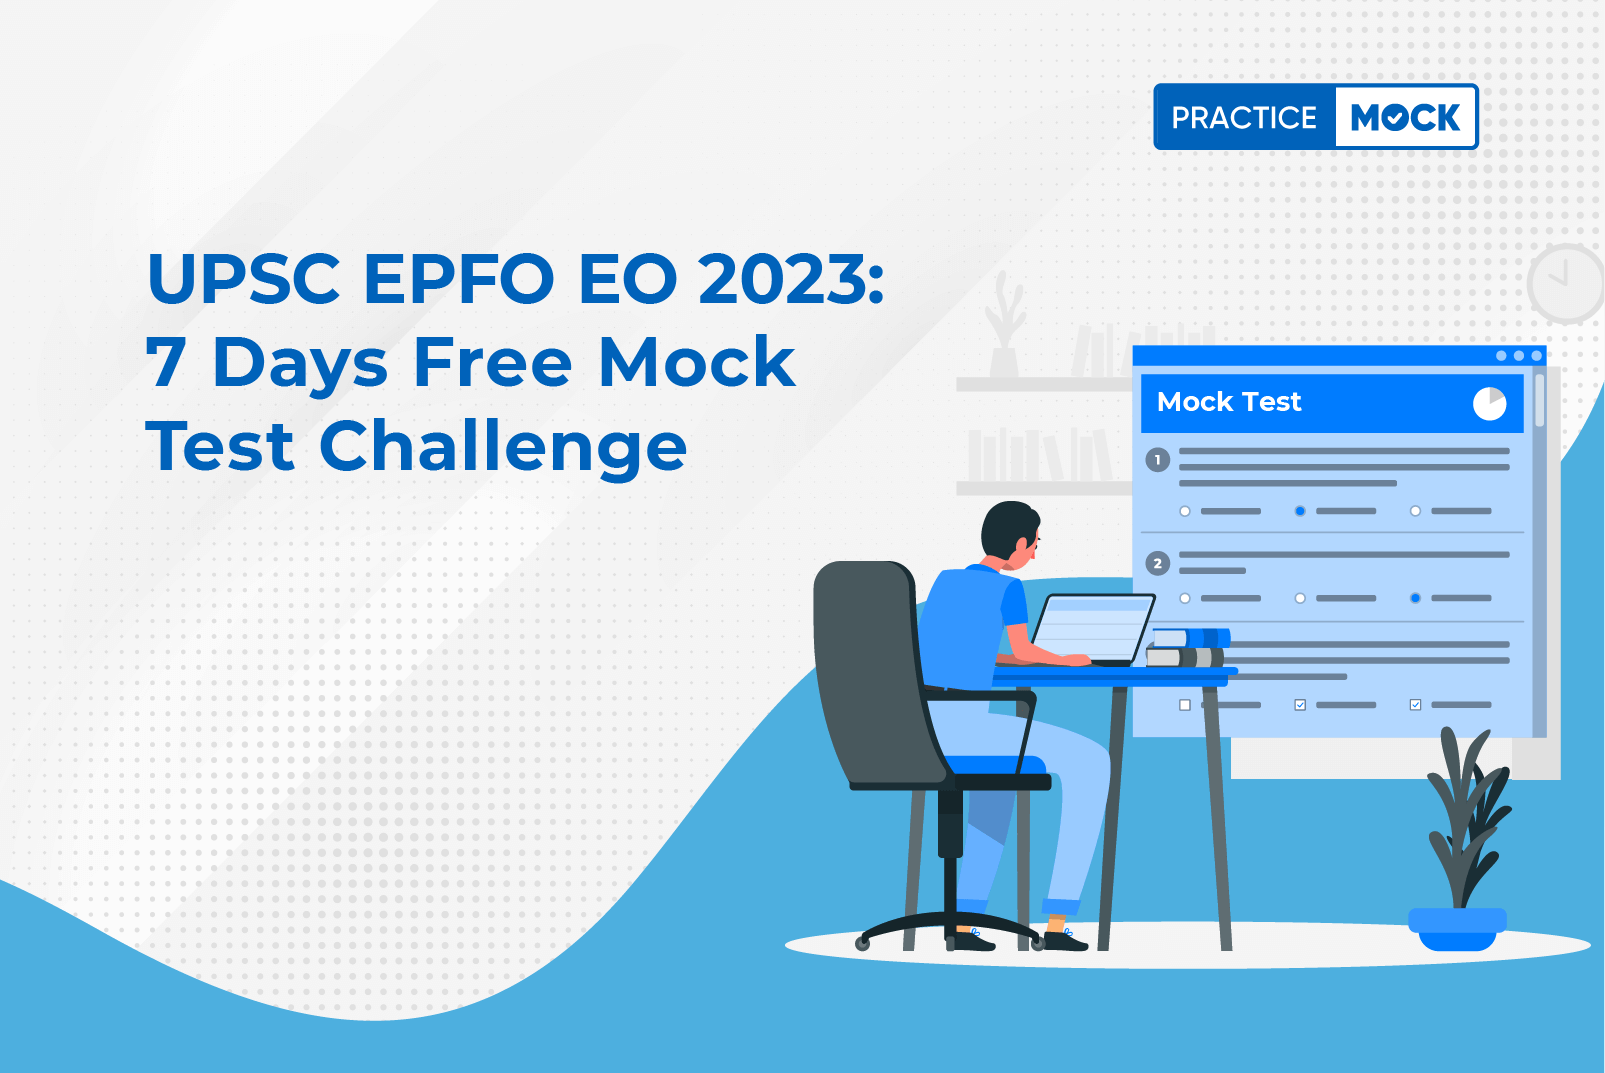 UPSC EPFO EO 2023 7 Days Free Mock Test Challenge